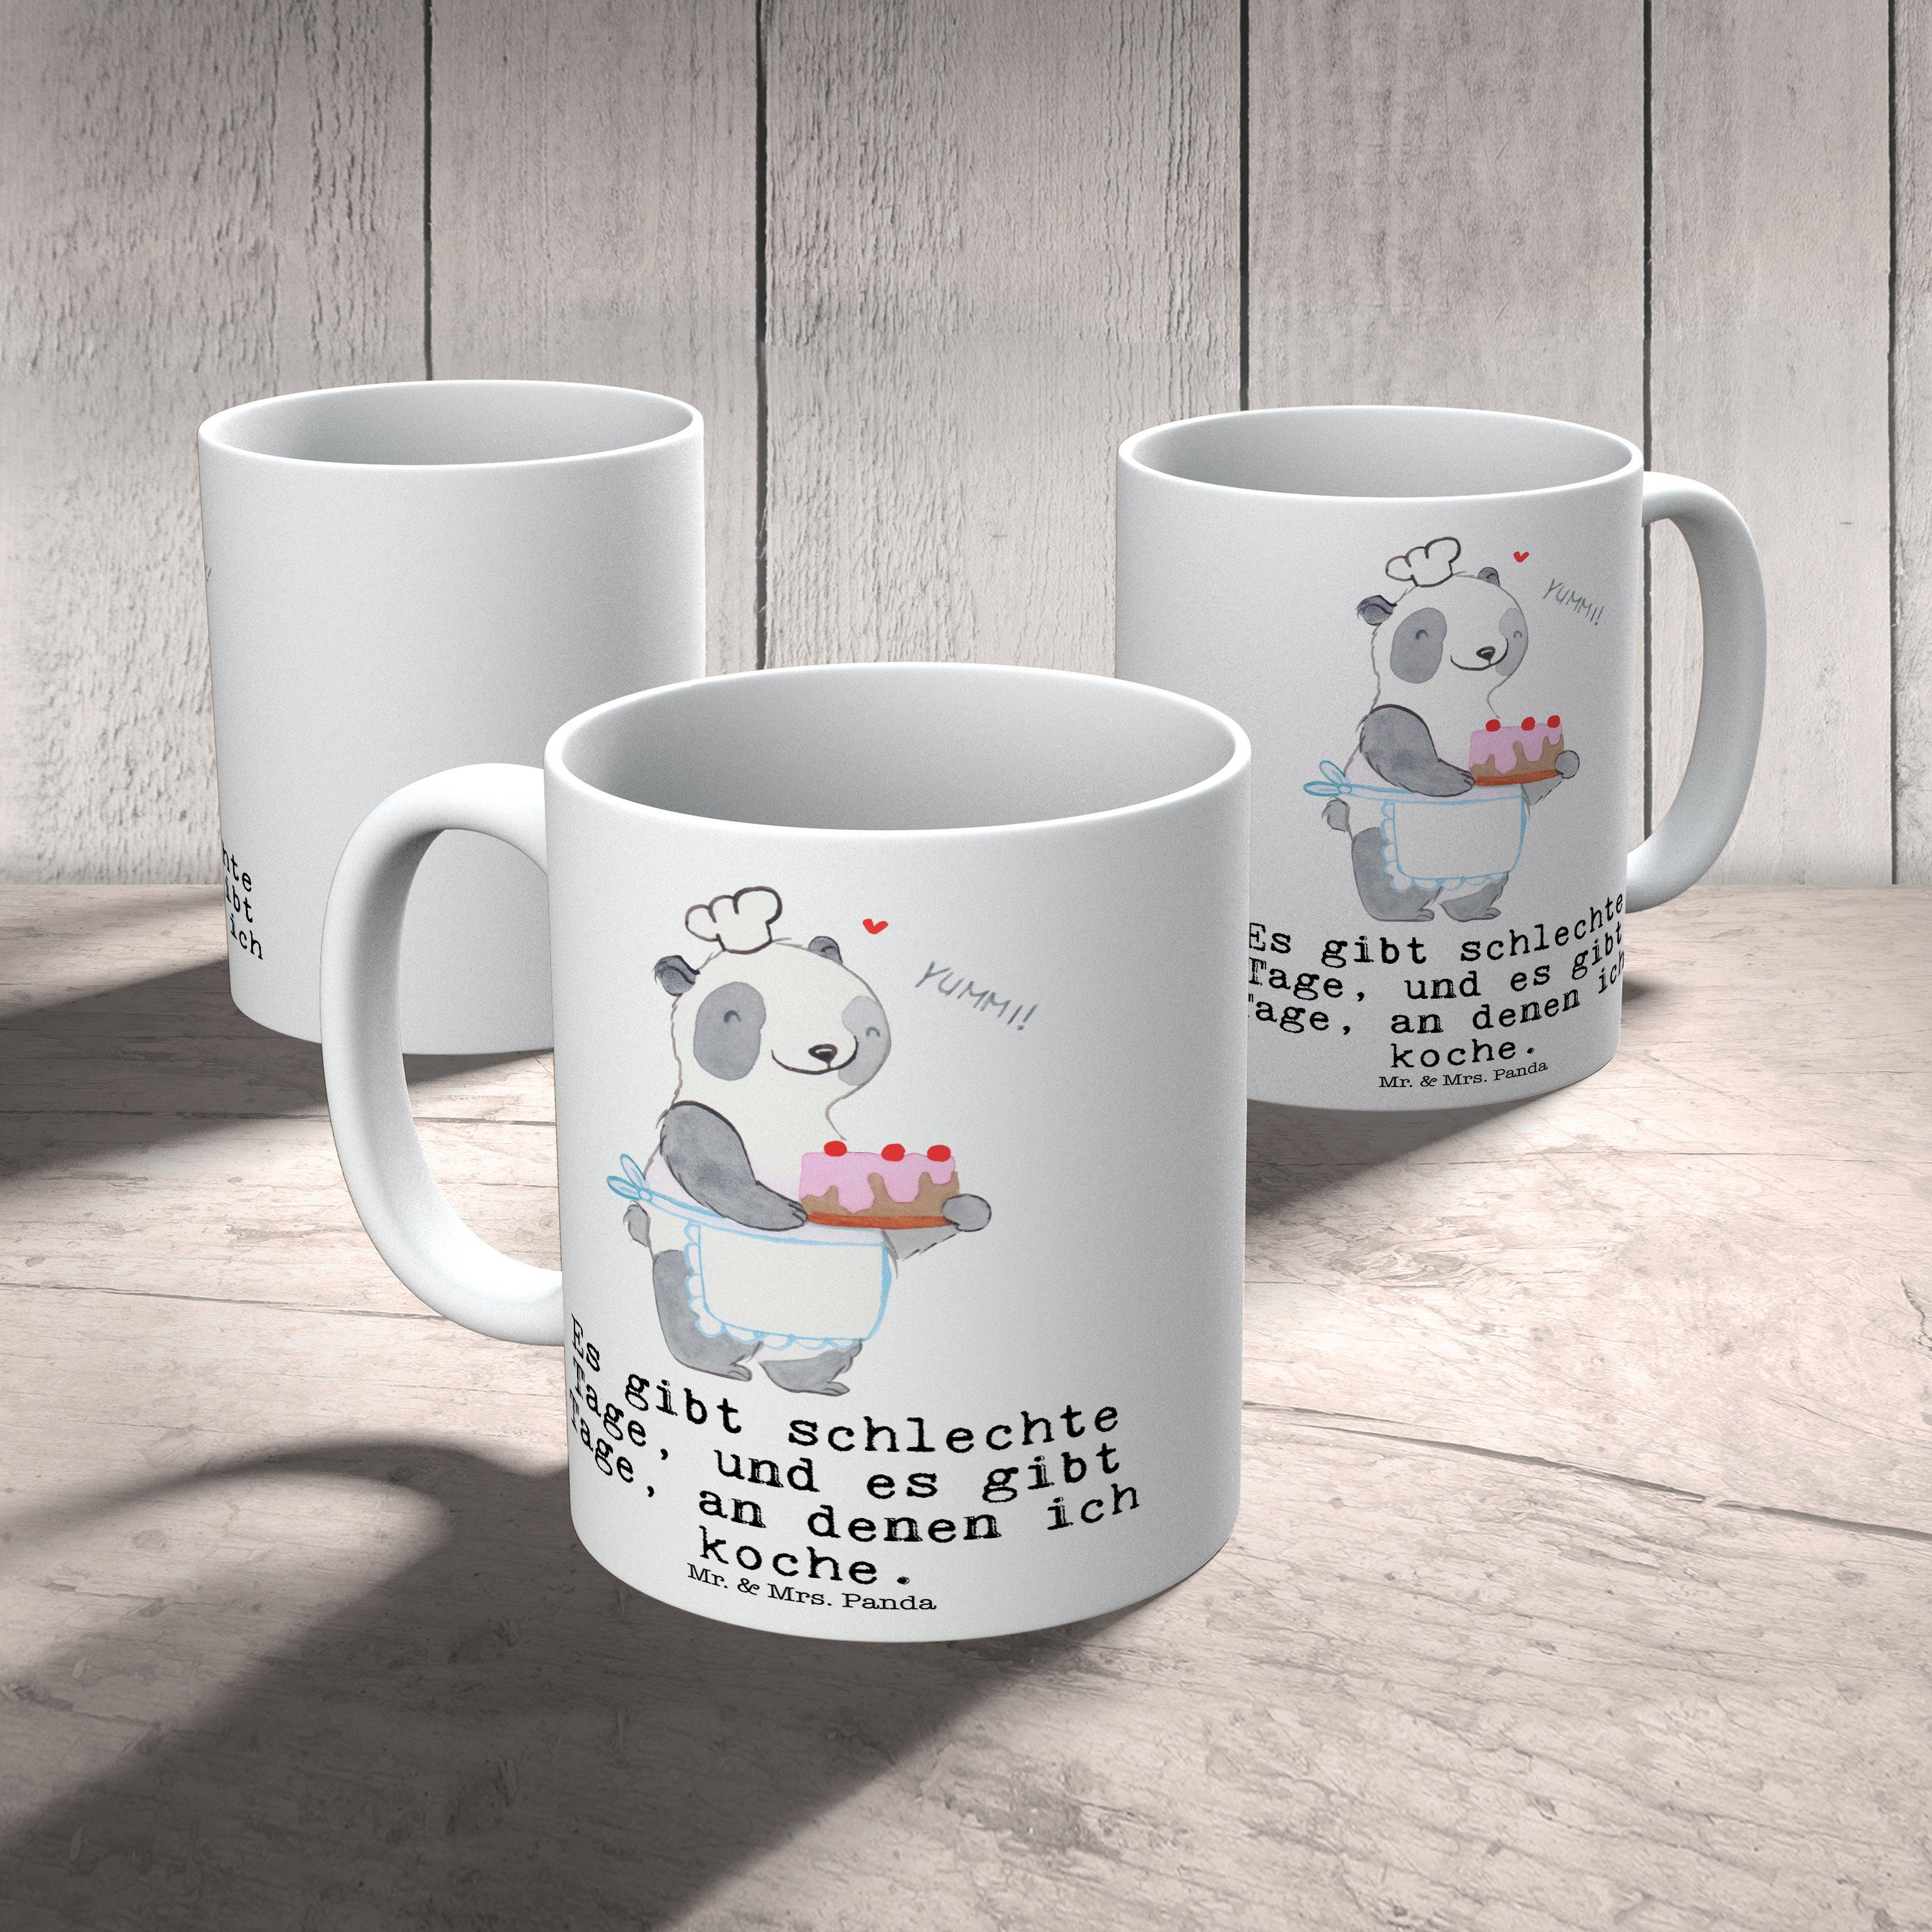 Mr. & Mrs. Panda Tasse Weiß Keramik Bär K, Geschenk, Motive, Gewinn, - Kochen Teebecher, Tage Tasse 